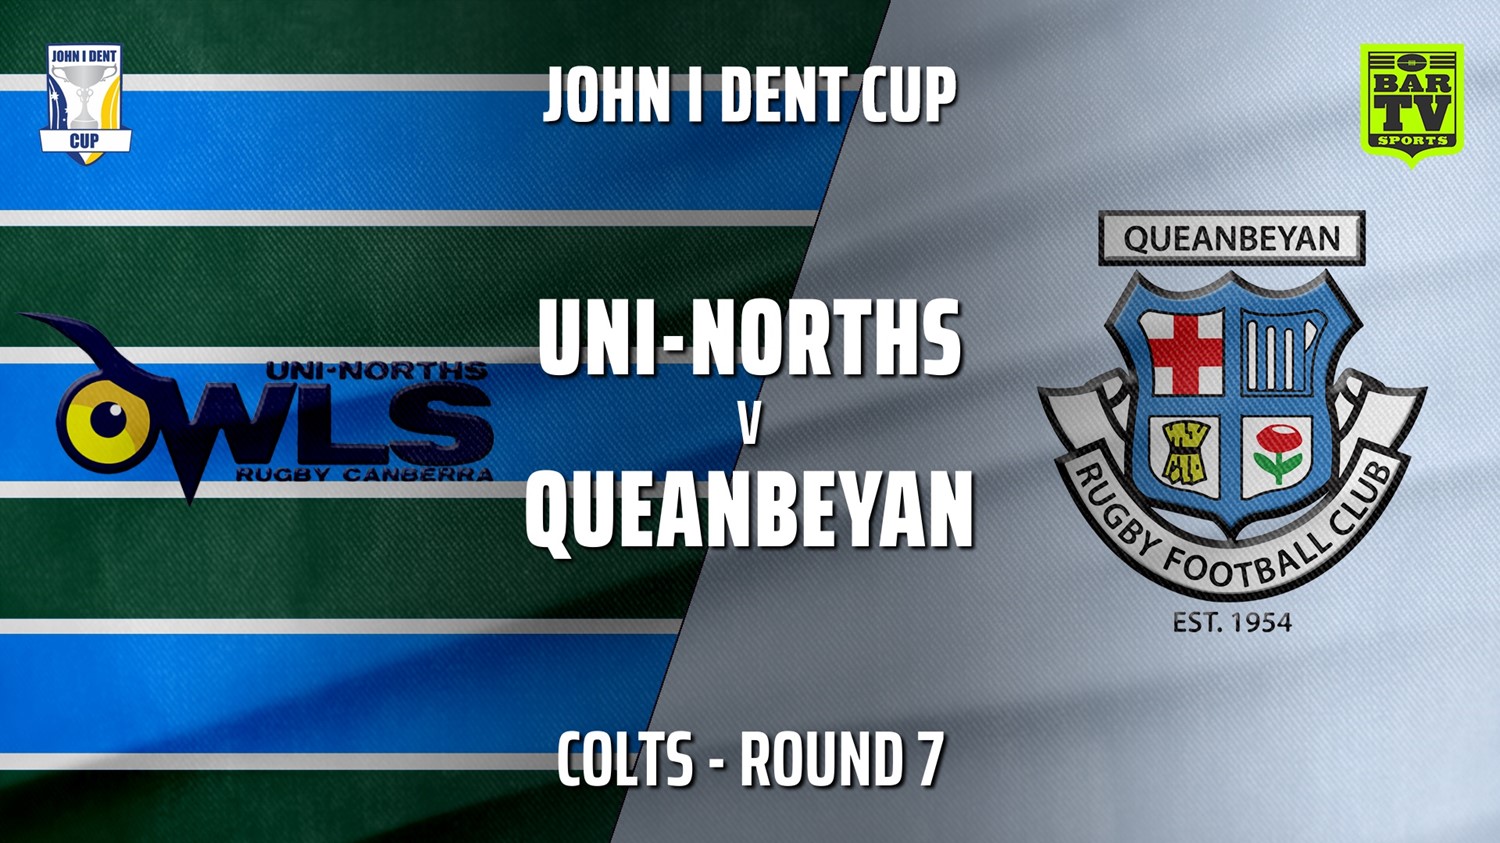 210605-John I Dent (ACT) Round 7 - Colts - UNI-Norths v Queanbeyan Whites Minigame Slate Image